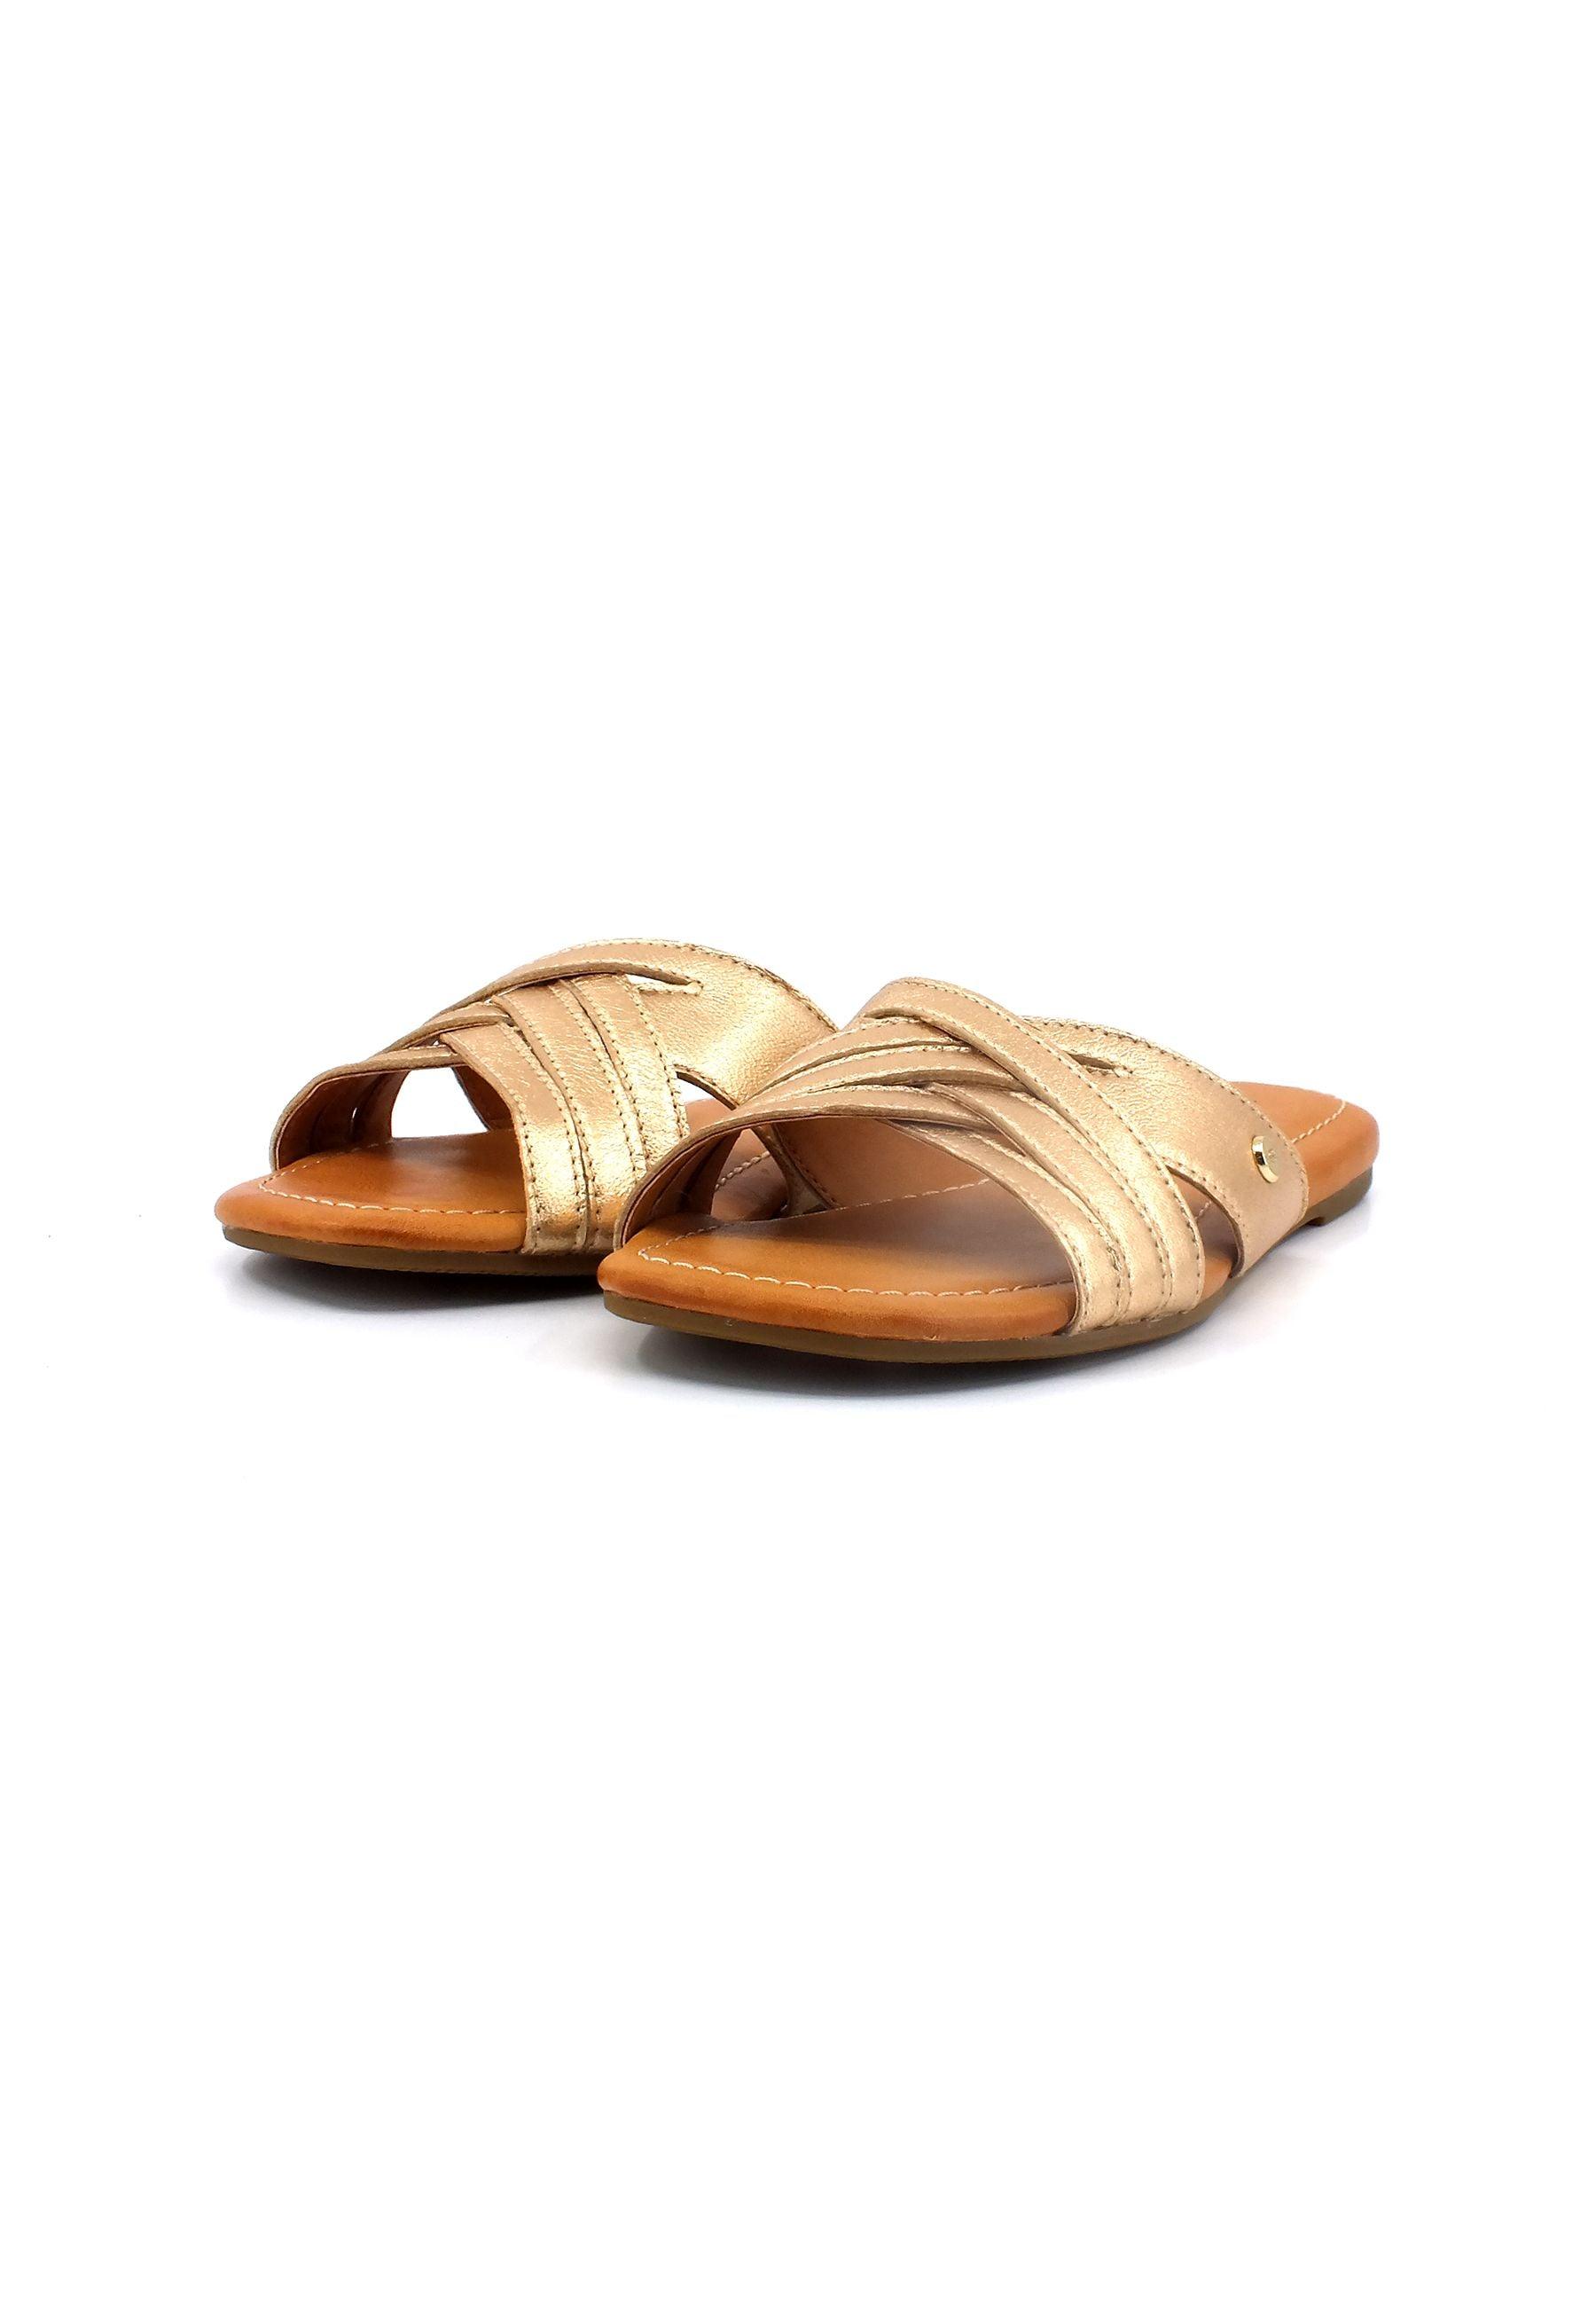 UGG Kenleigh Slide Ciabatta Donna Gold Metallic W1142712 - Sandrini Calzature e Abbigliamento